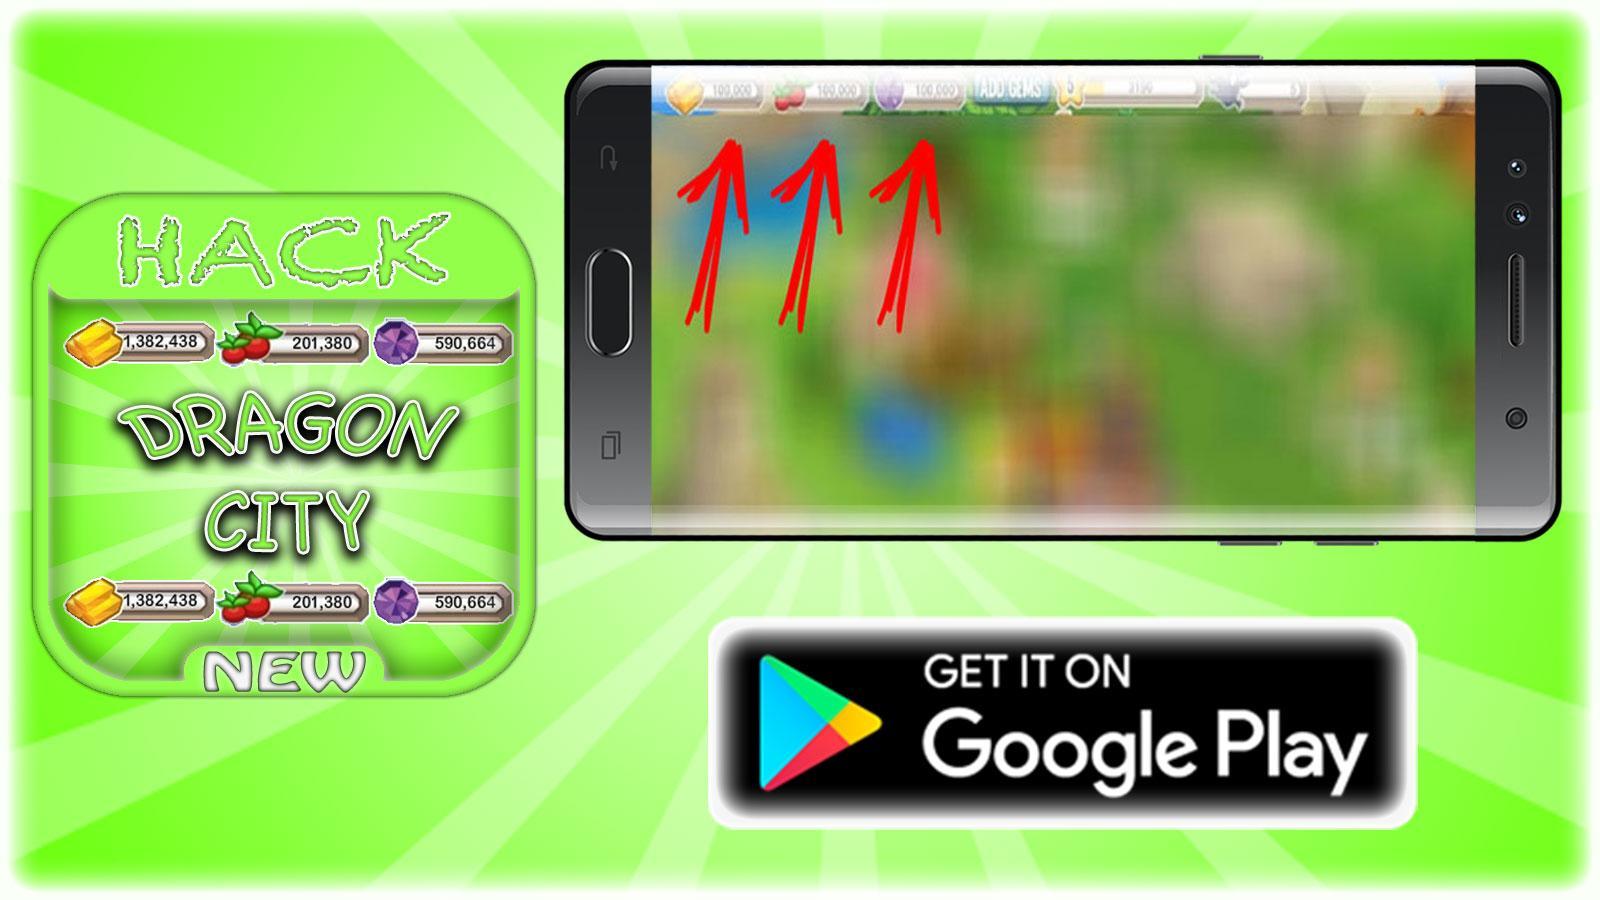 Hack For Dragon City Game App Joke - Prank. for Android ... - 